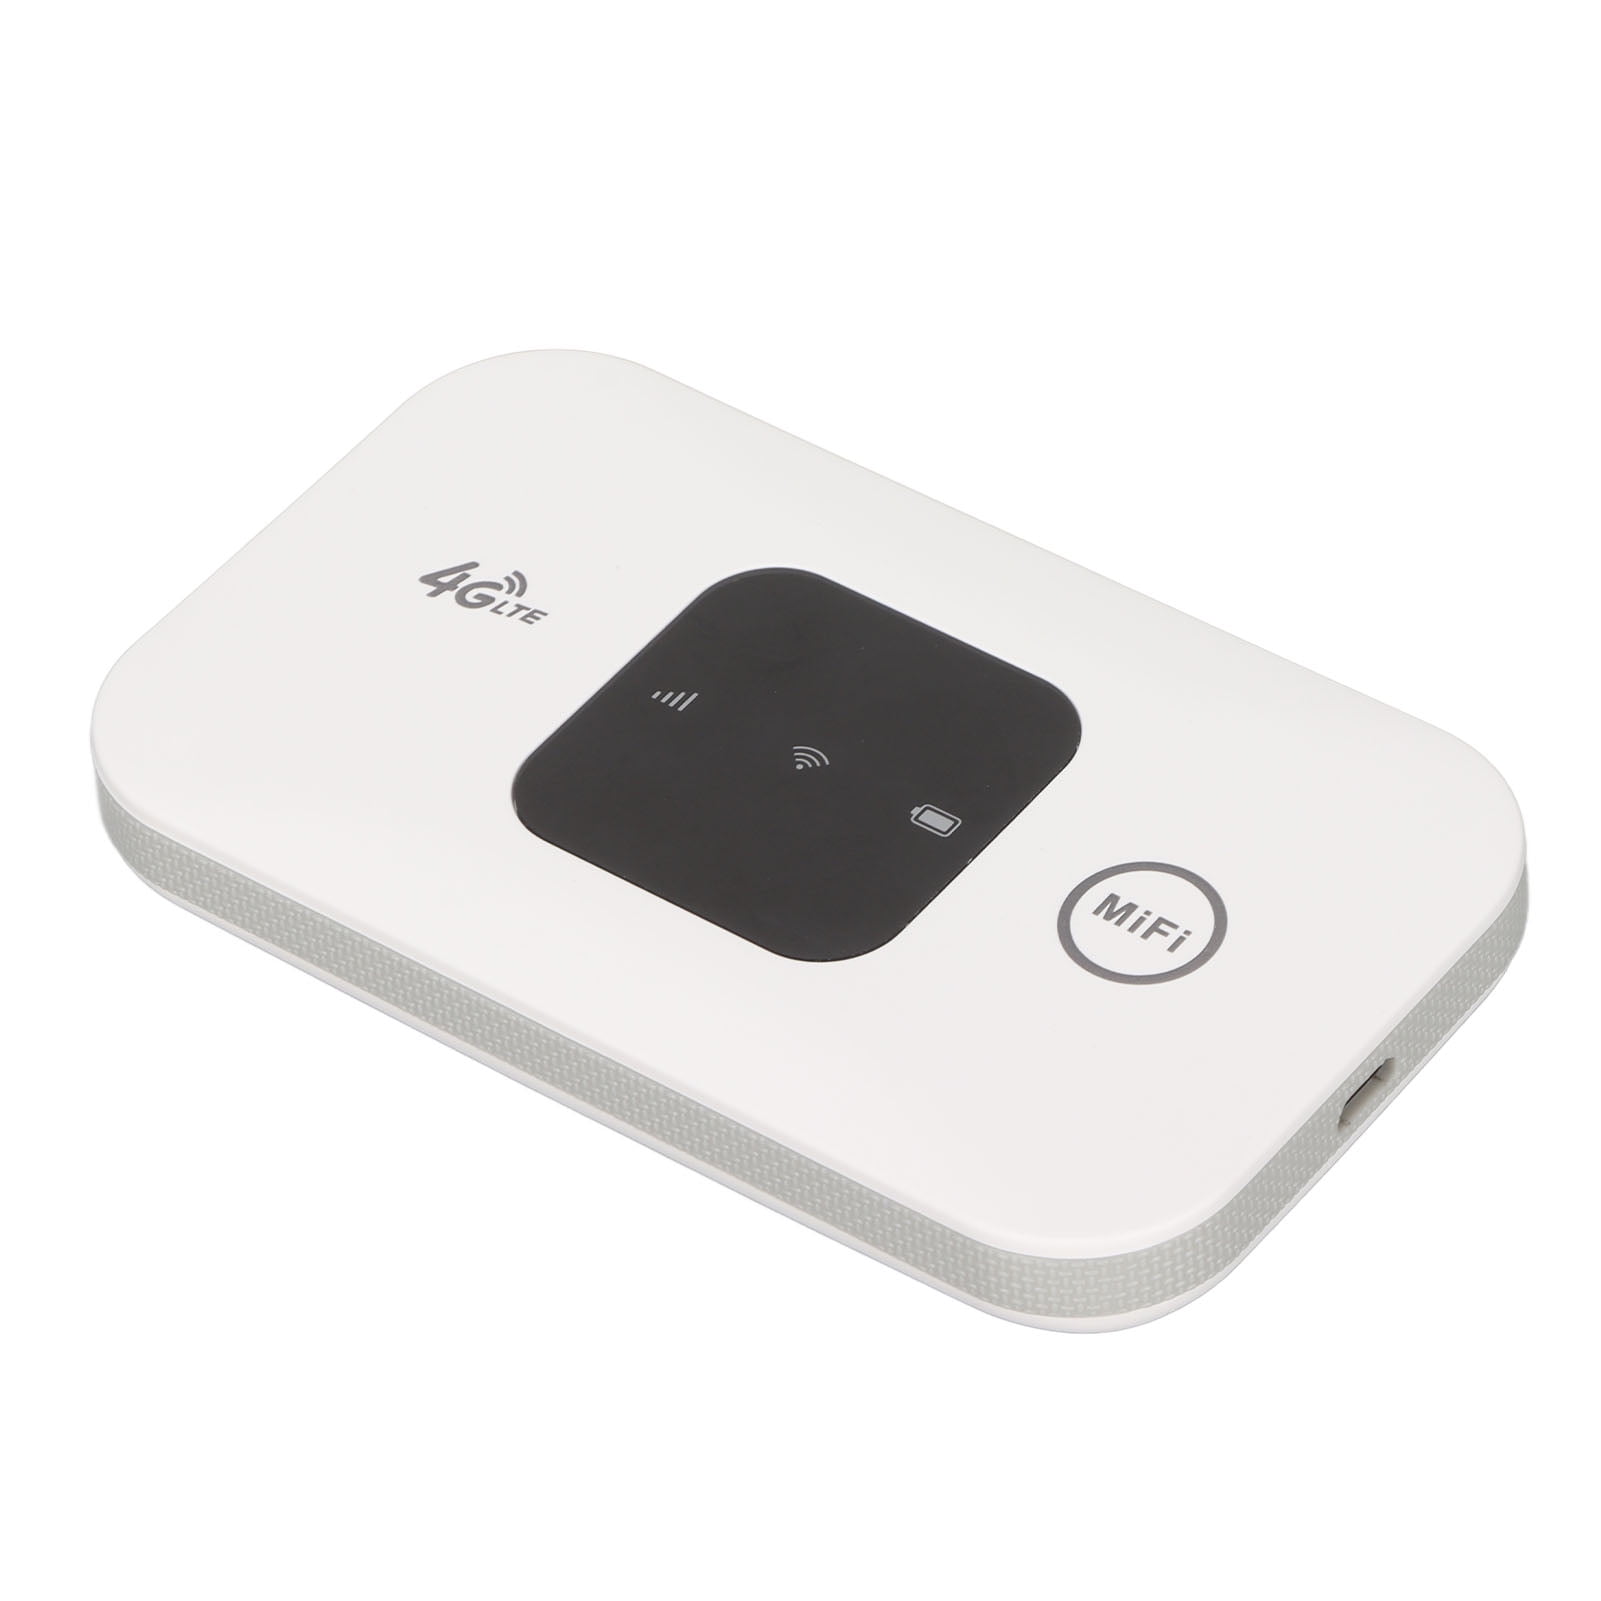 Brrnoo Mobile Hotspot Support 4G / 5G SIM Card Portable Long